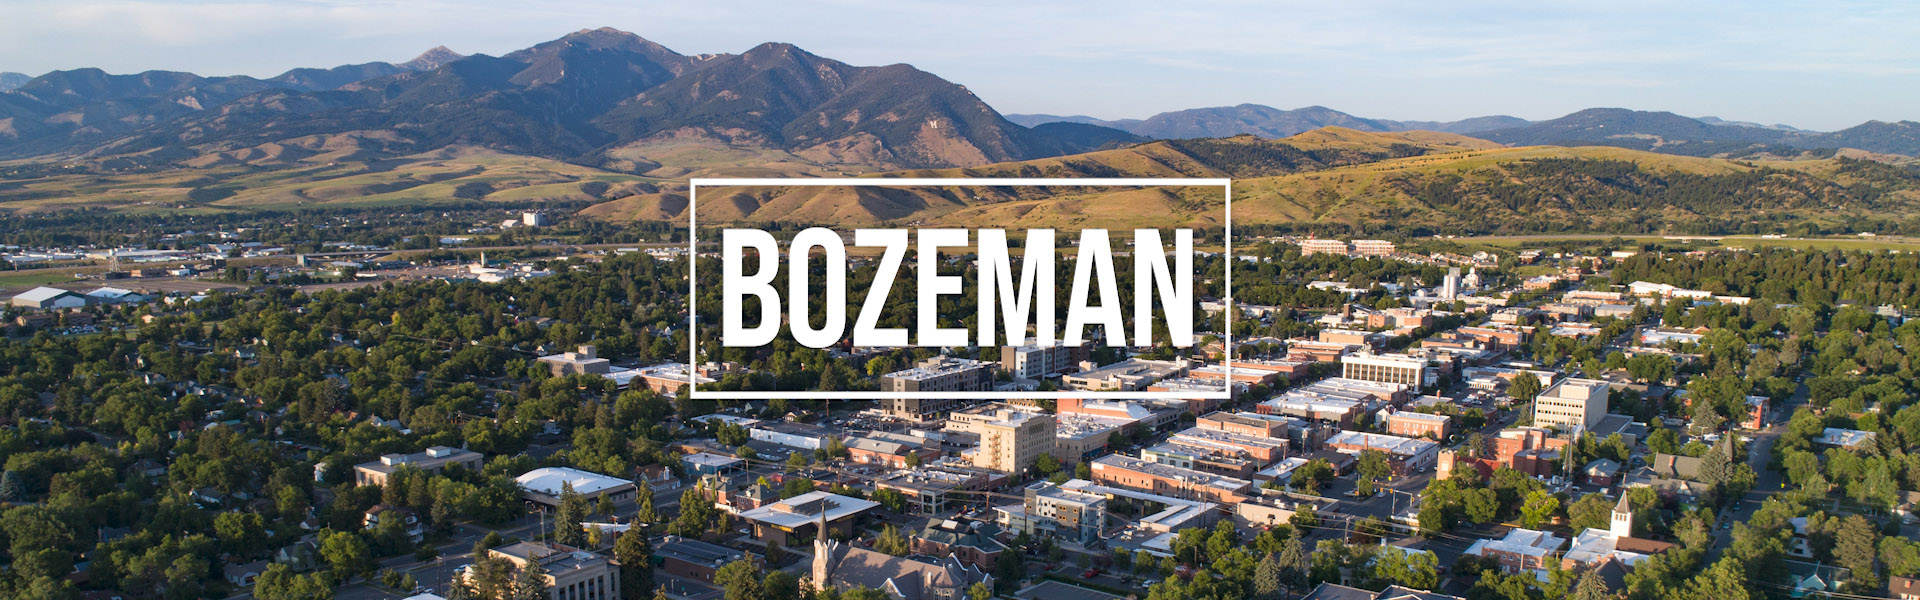 Bozeman MT Business Network Professional Week